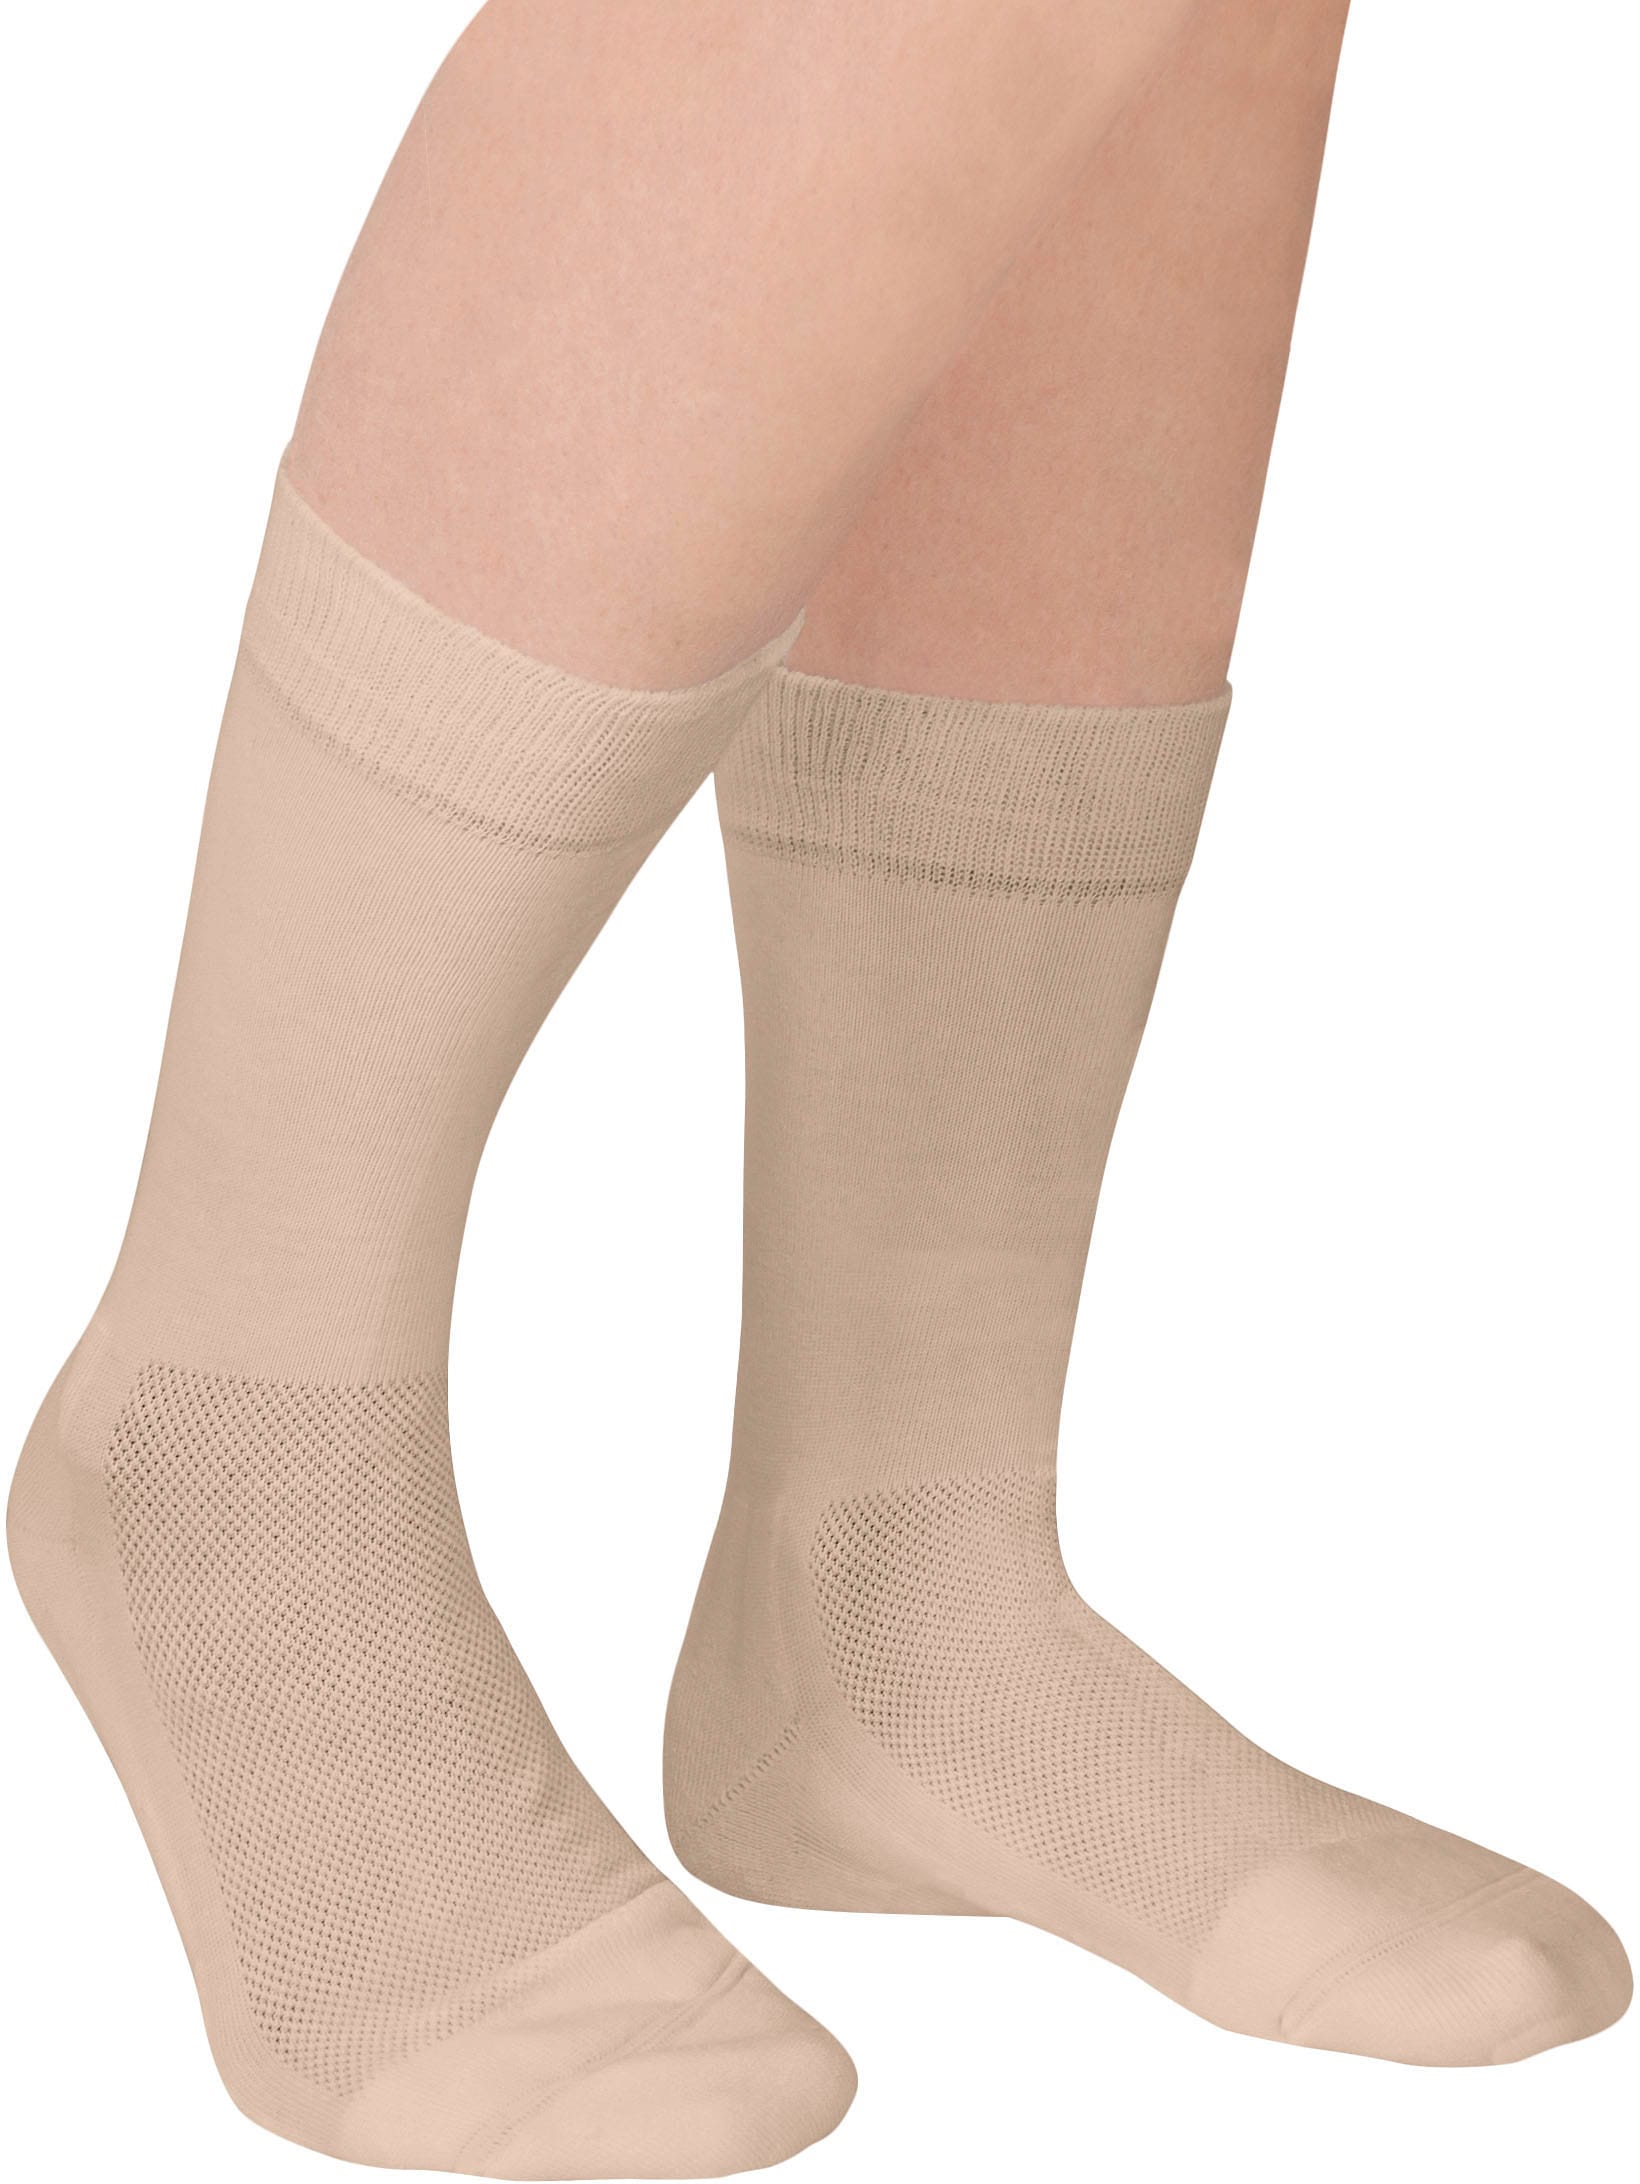 | (2 »Venenfeund BAUR Fußgut Socken«, Paar) Diabetikersocken bestellen Sensitiv